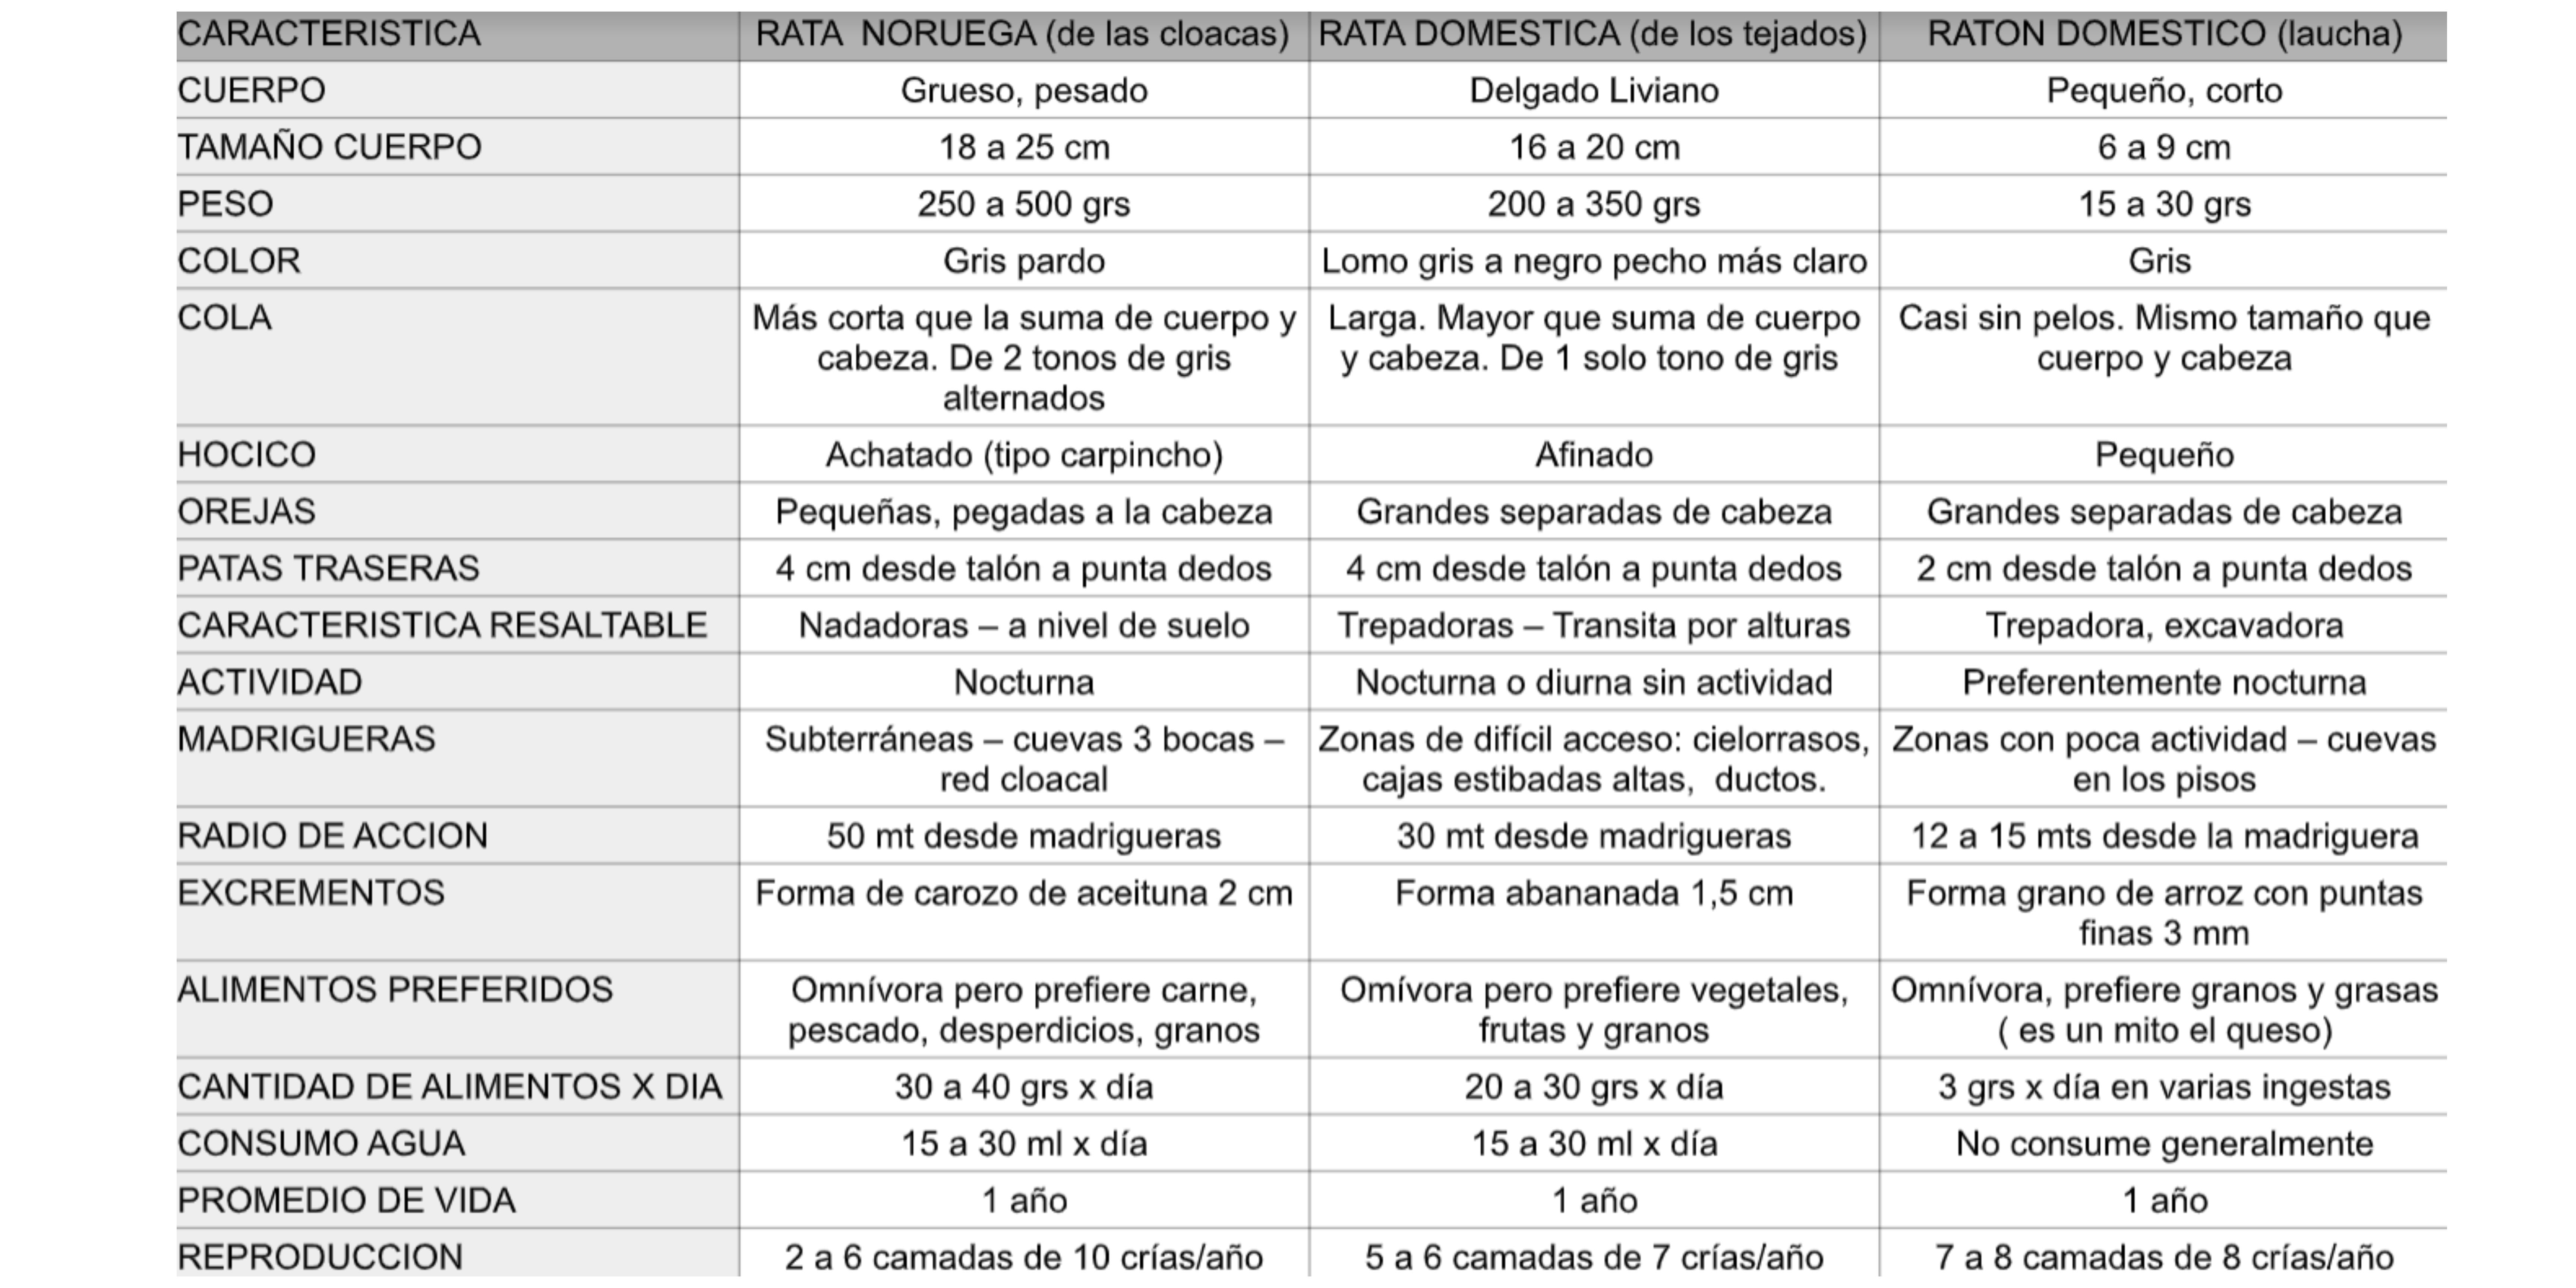 Tabla comparativa de Ratón doméstico, Rata doméstica y Rata de las cloacas.